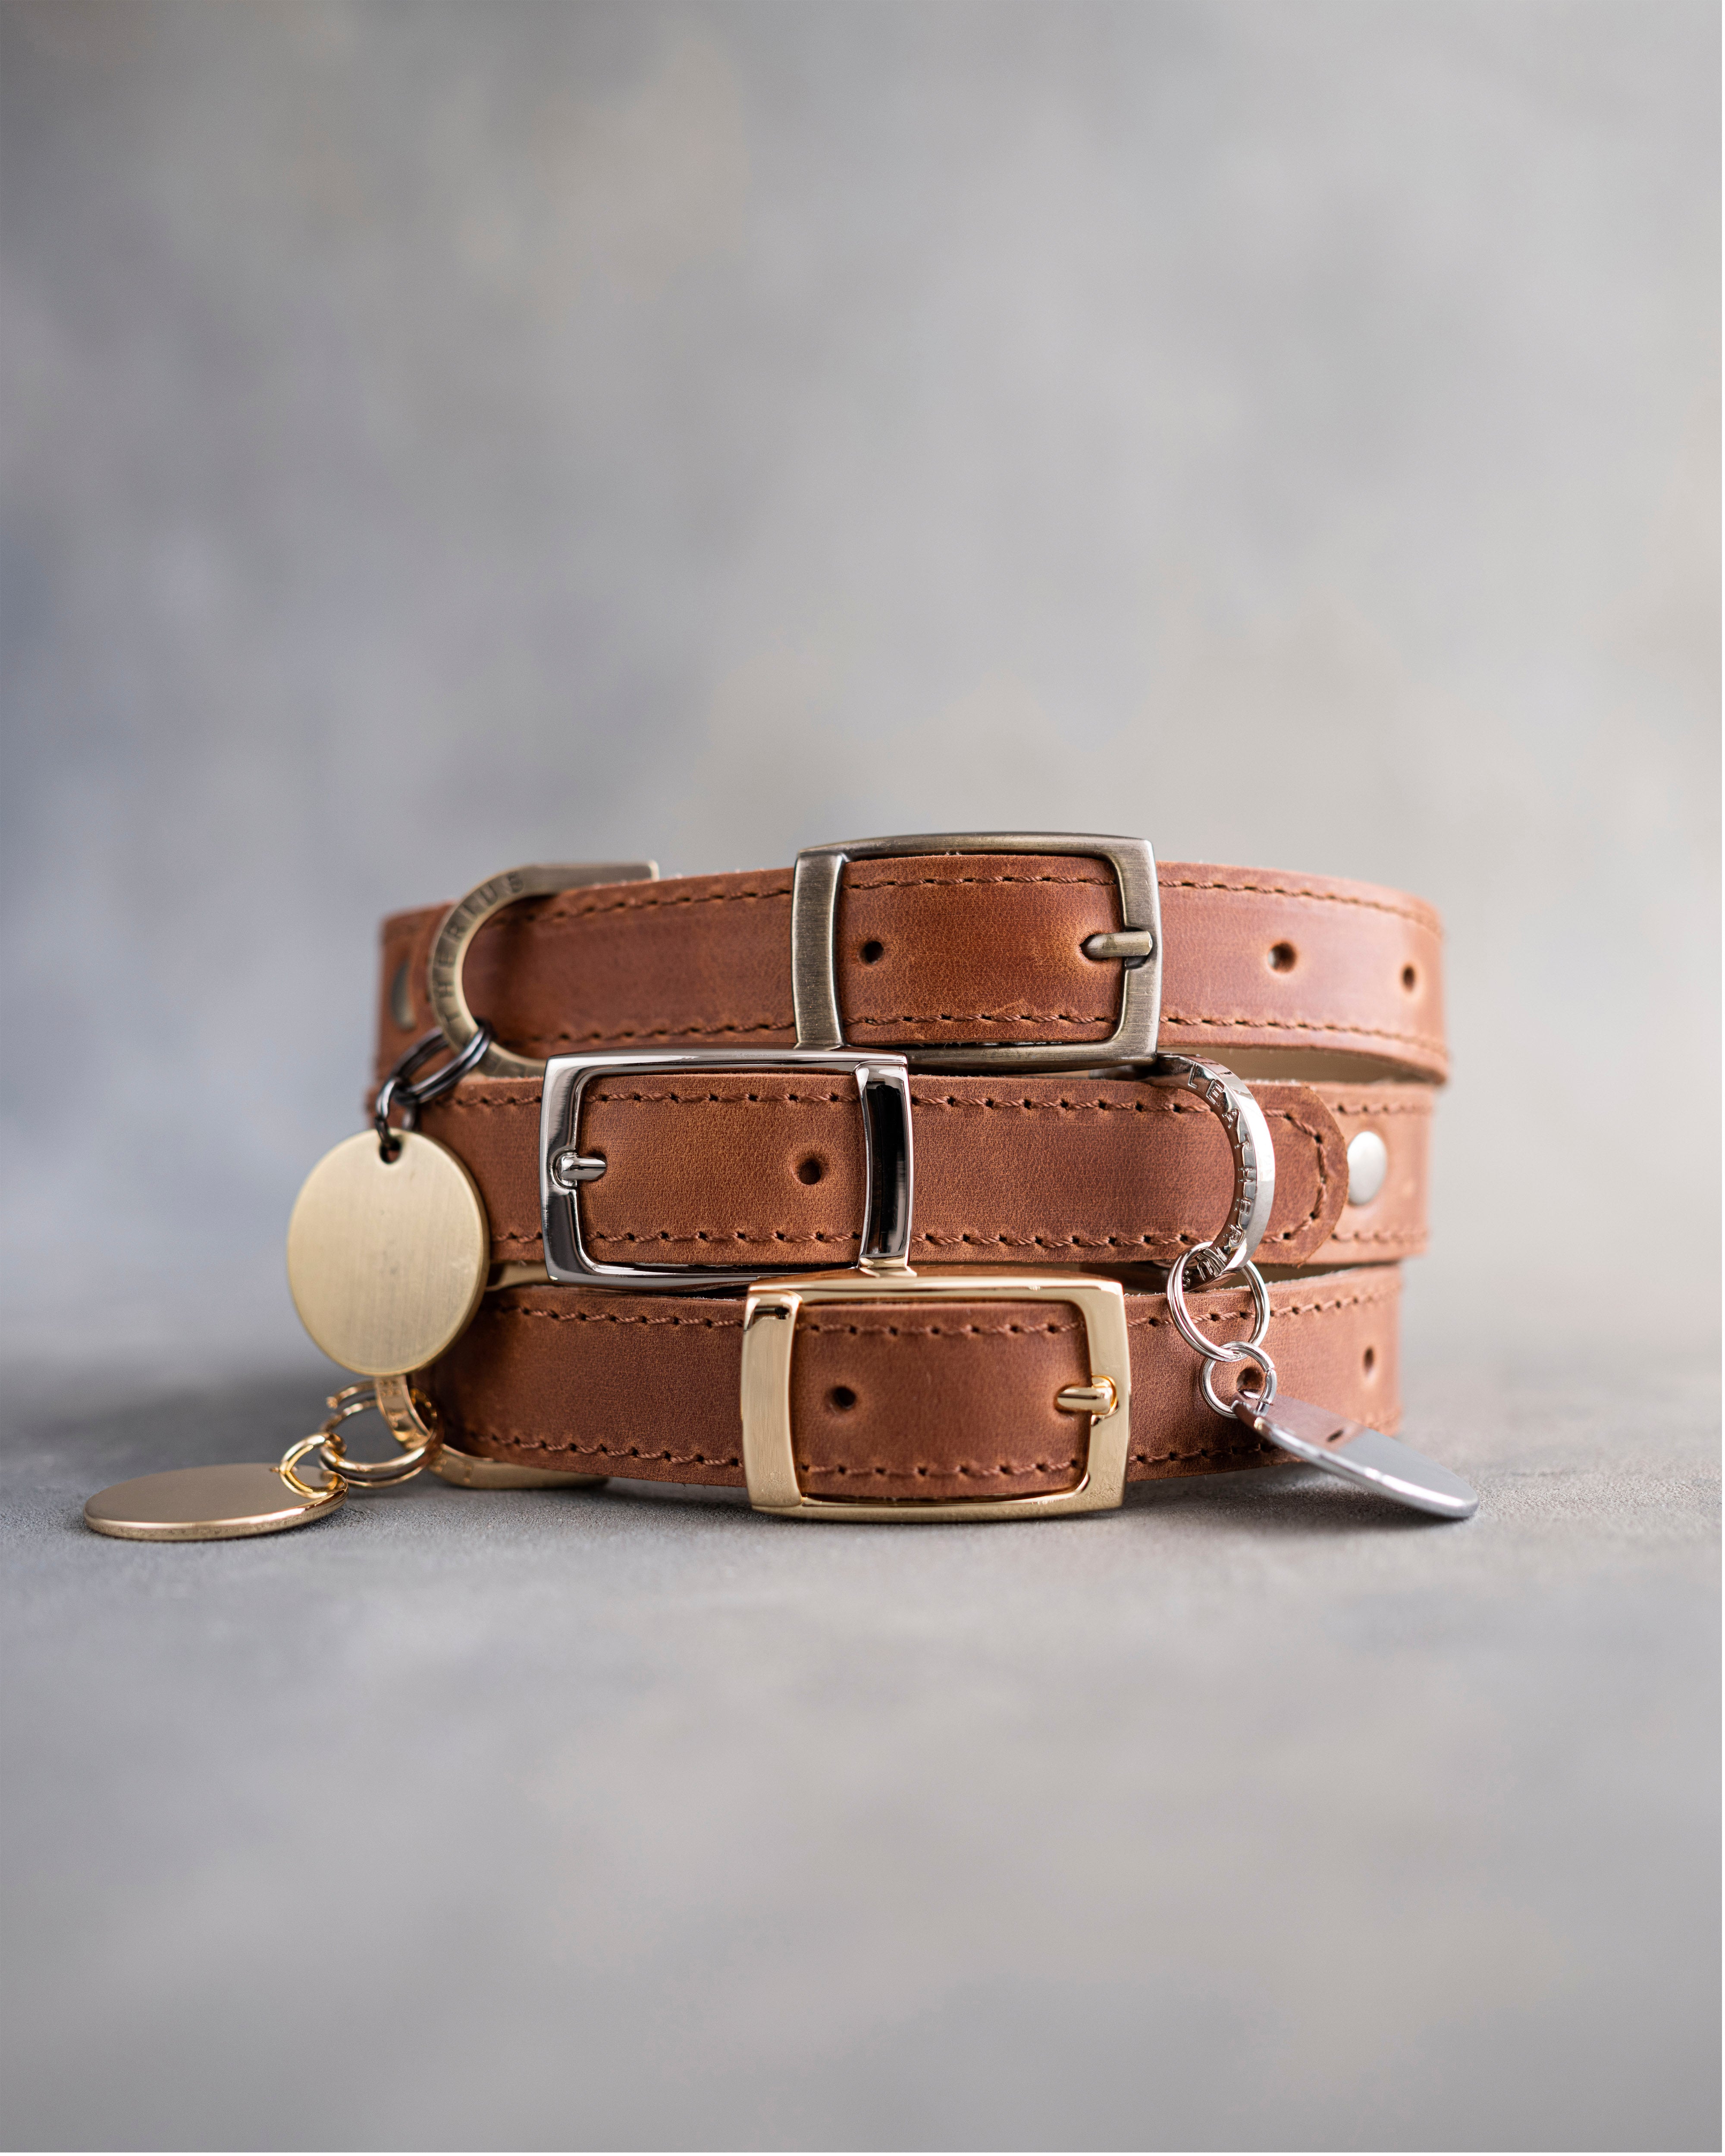 Dog Collar in Arizona leather with classy pin buckle